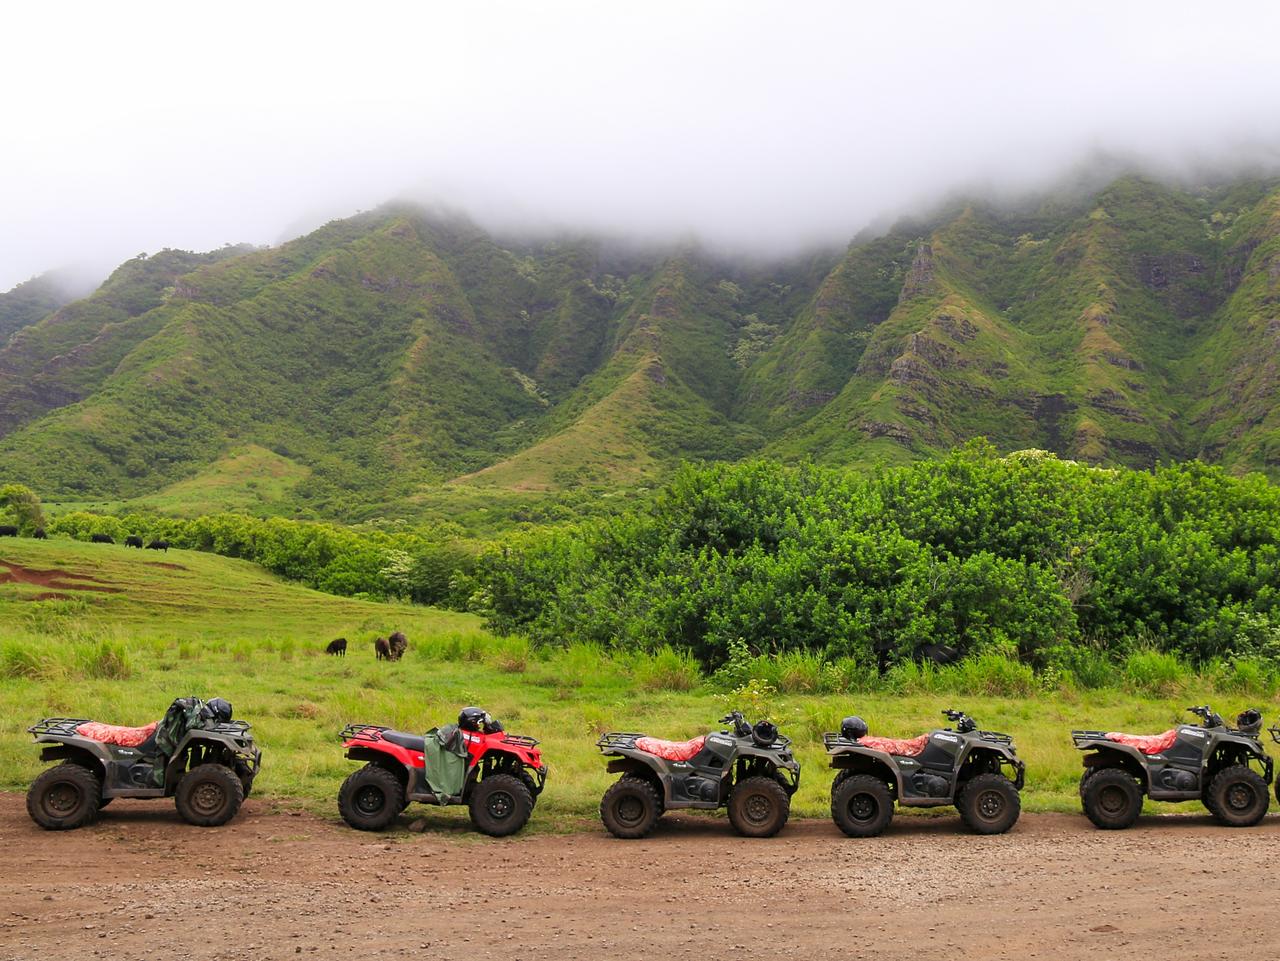 ATVs in a row at Kualoa Ranch, Hawaii